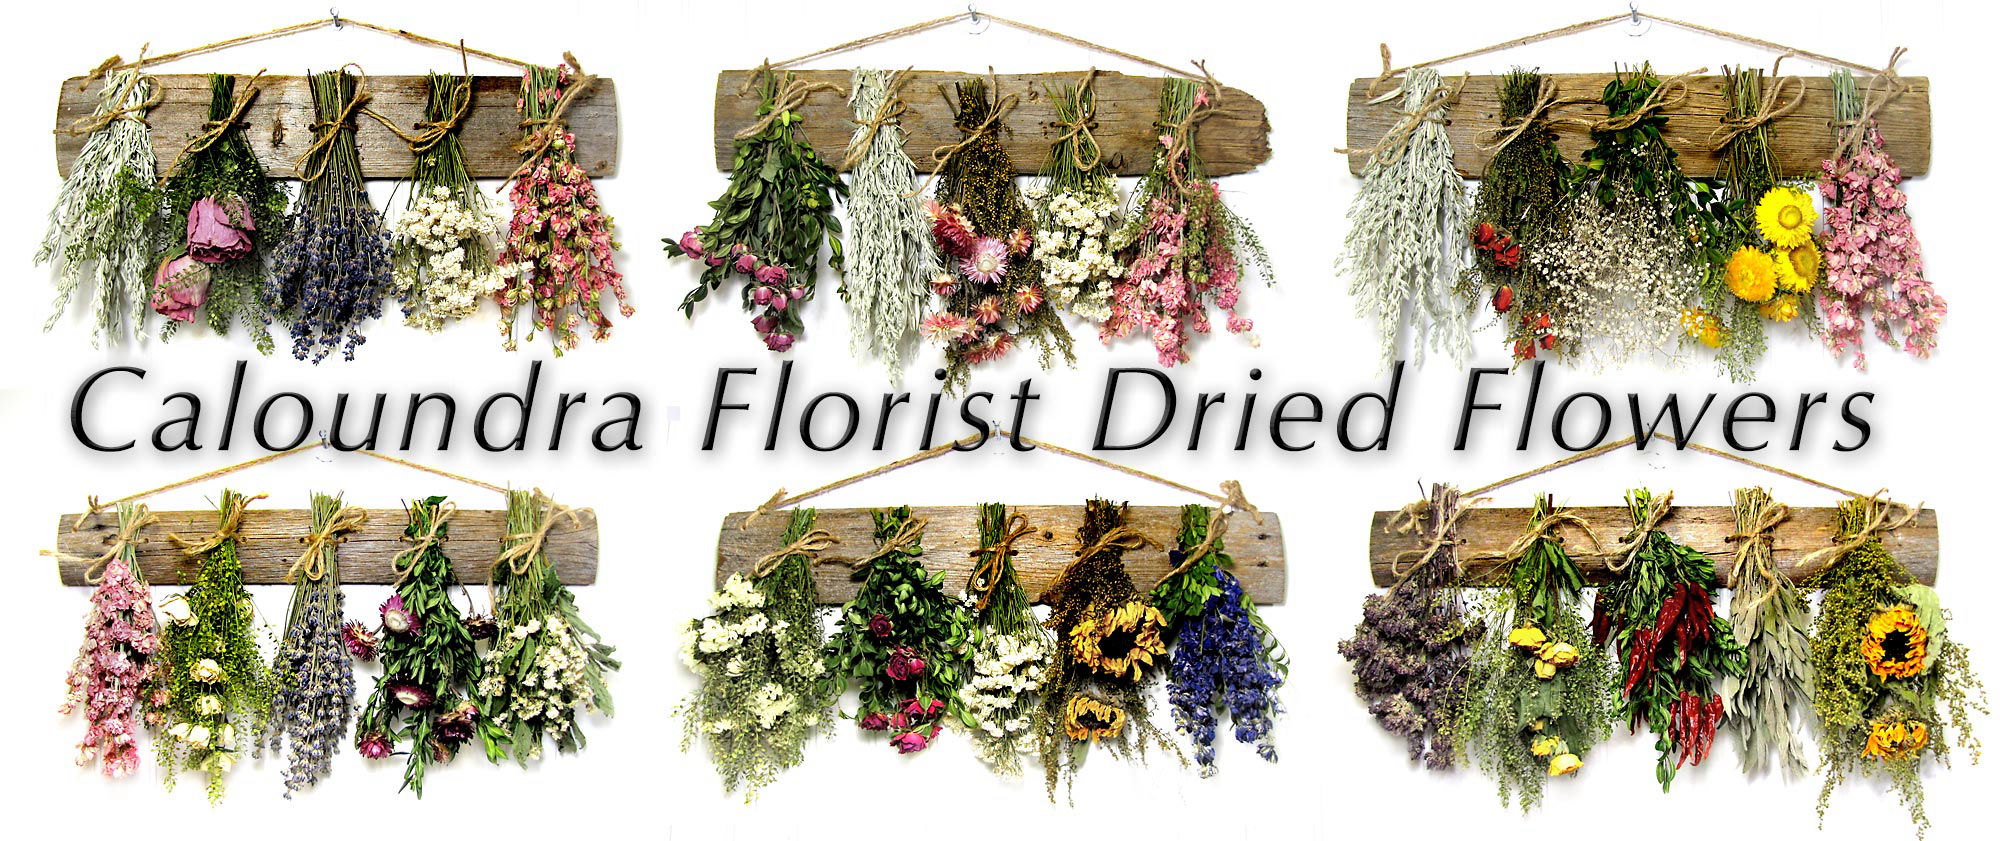 CALOUNDRA FLORIST DRIED FLOWERS